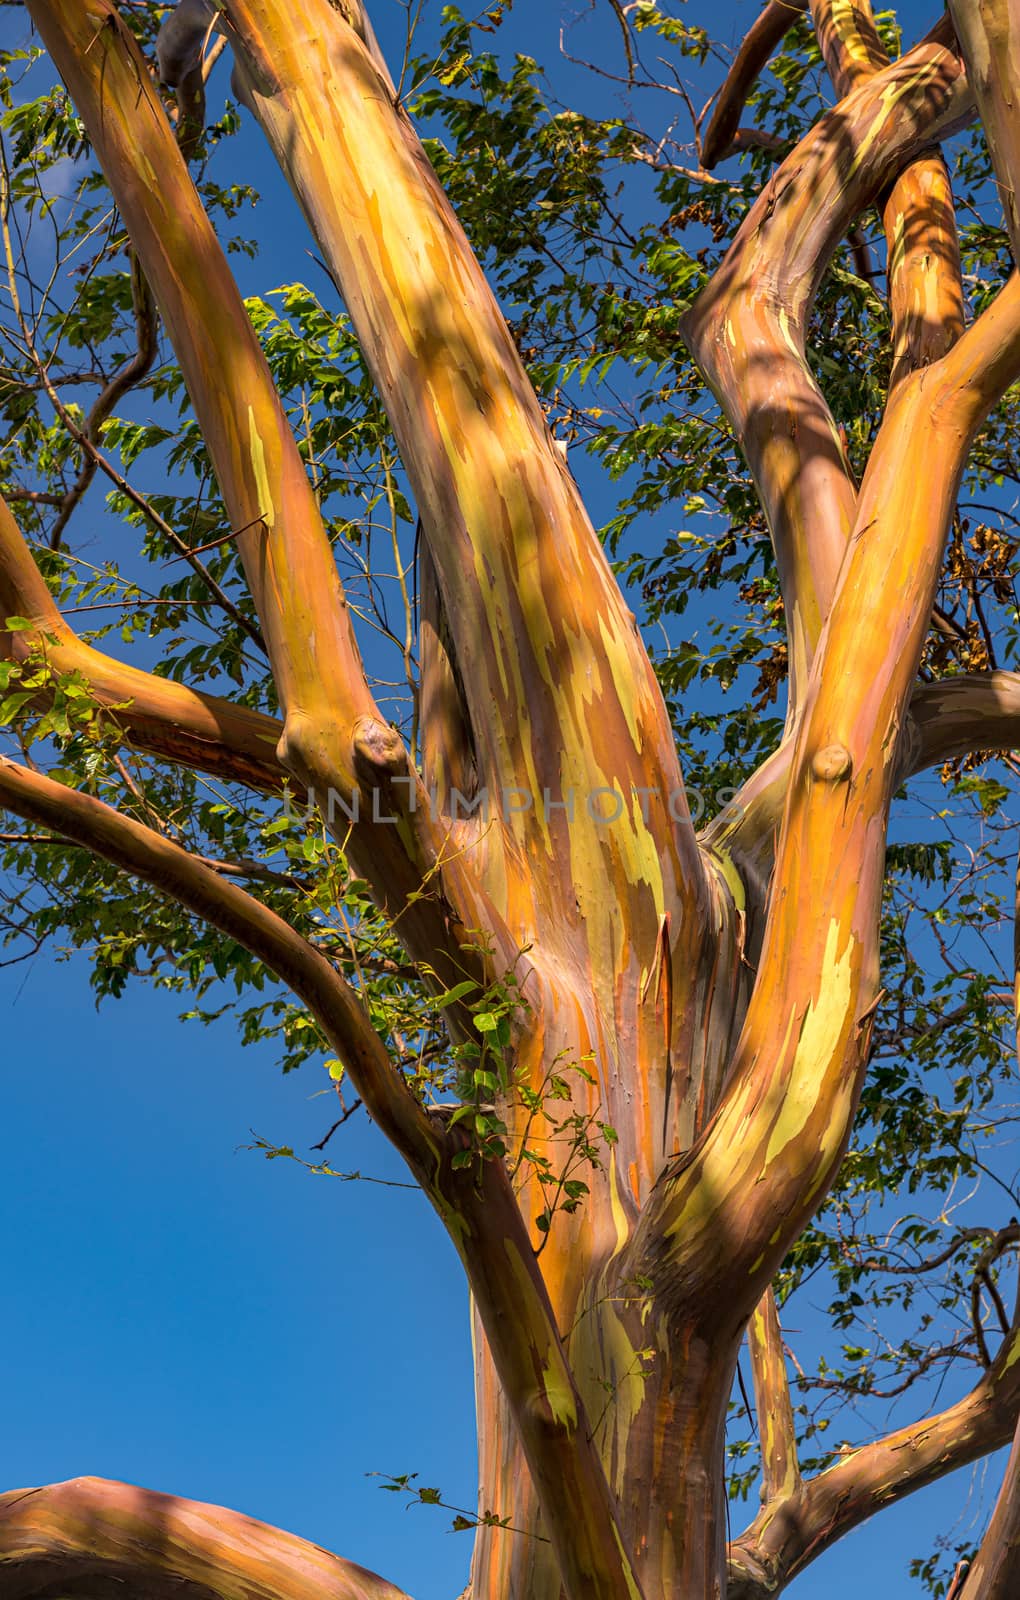 Pattern of branches of rainbow eucalyptus trees against blue sky on Kauai by steheap